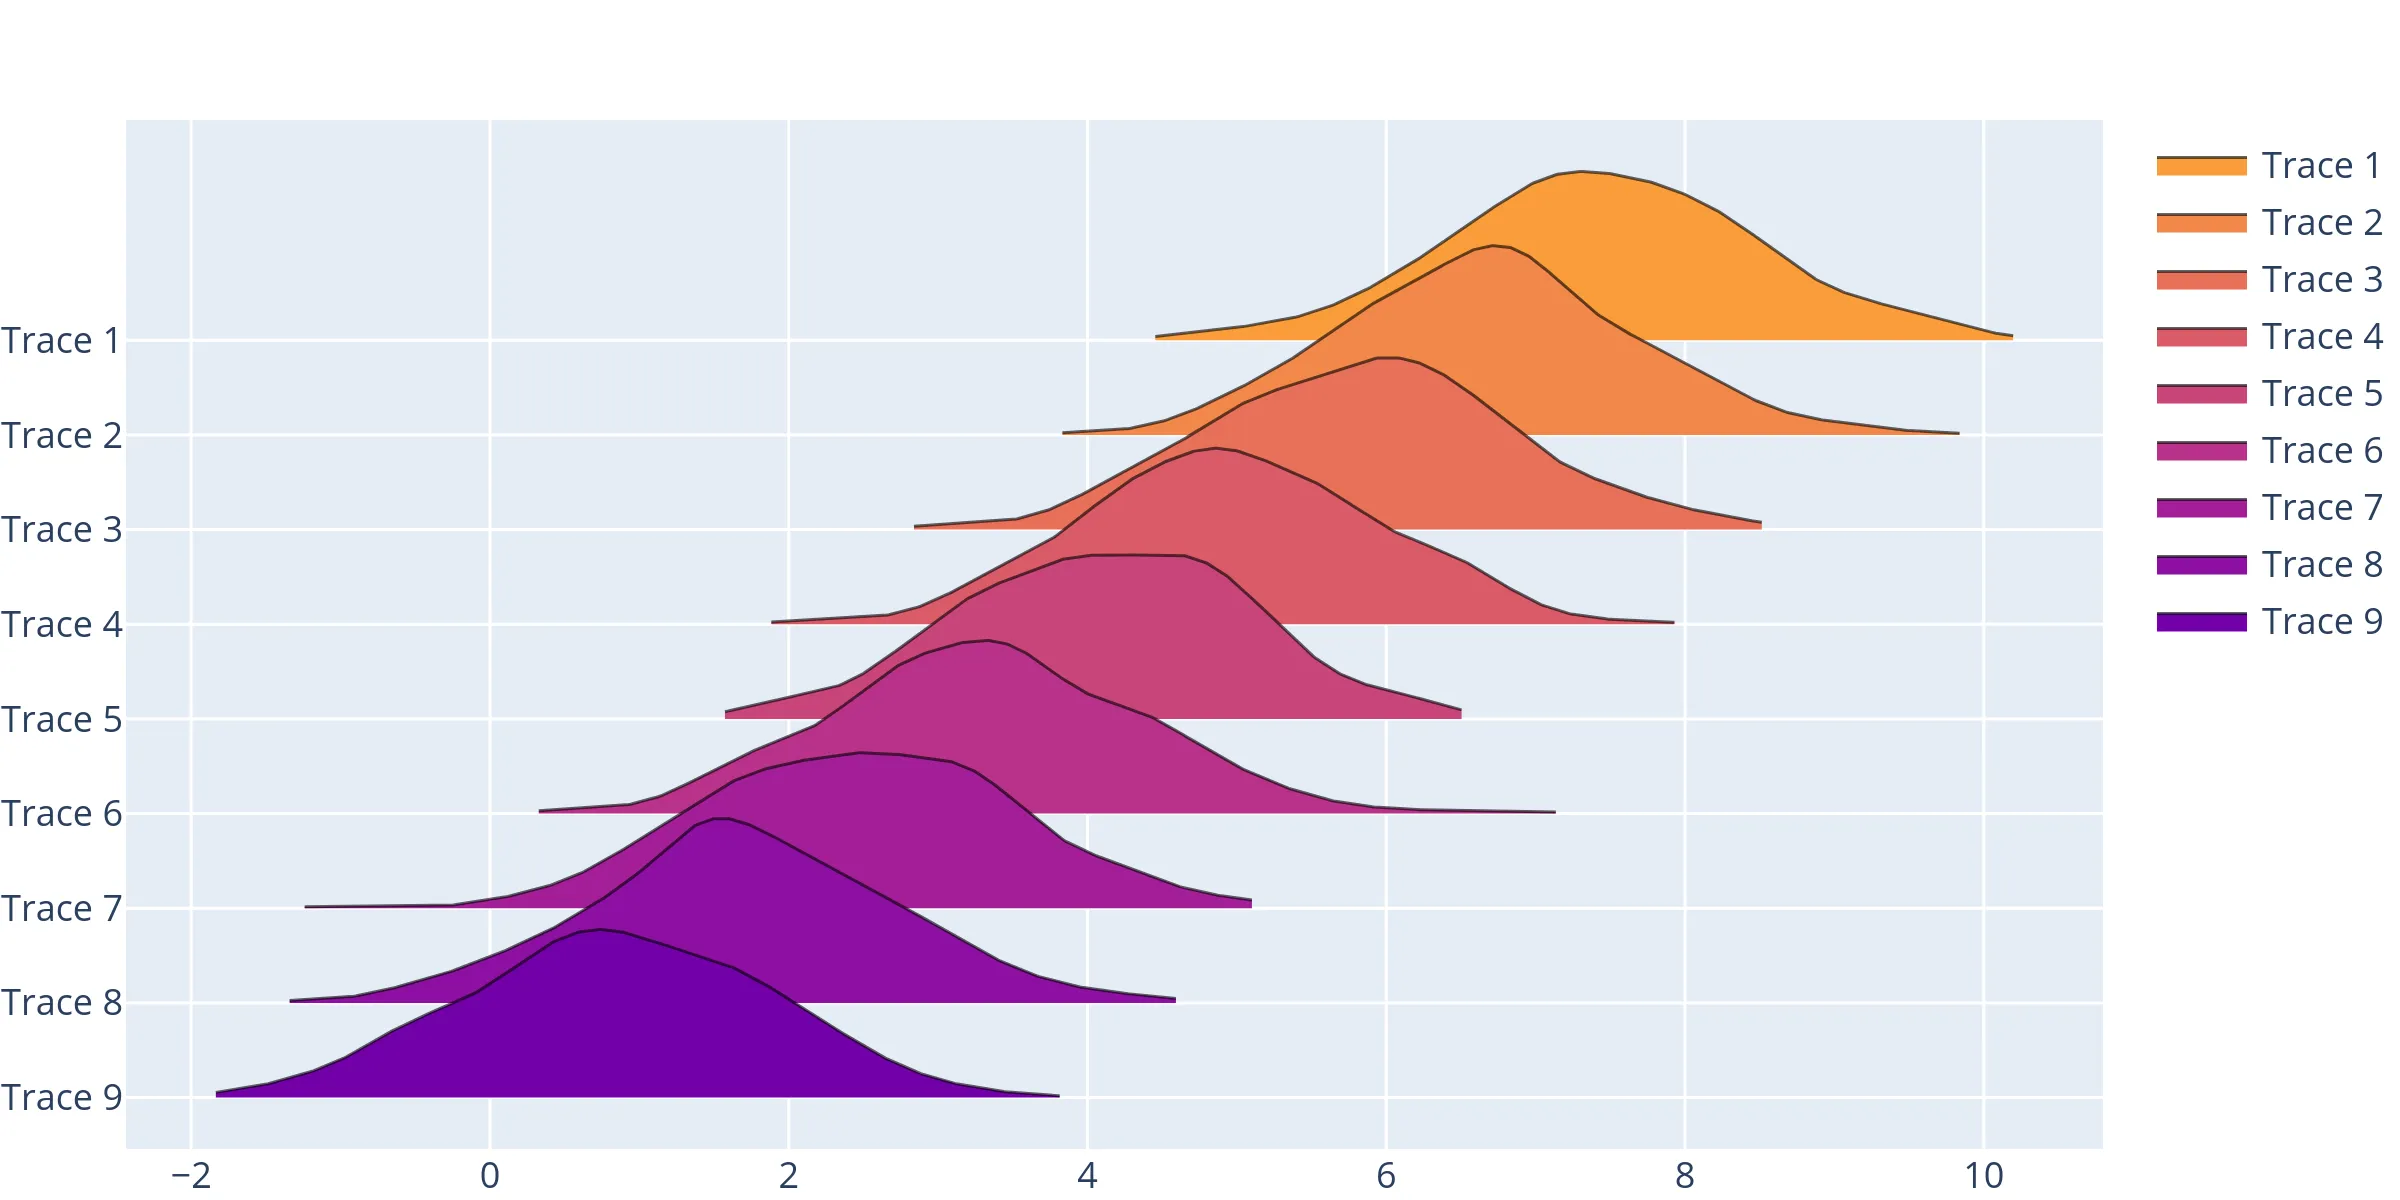 ridgeline plot example using the ridgeplot Python library